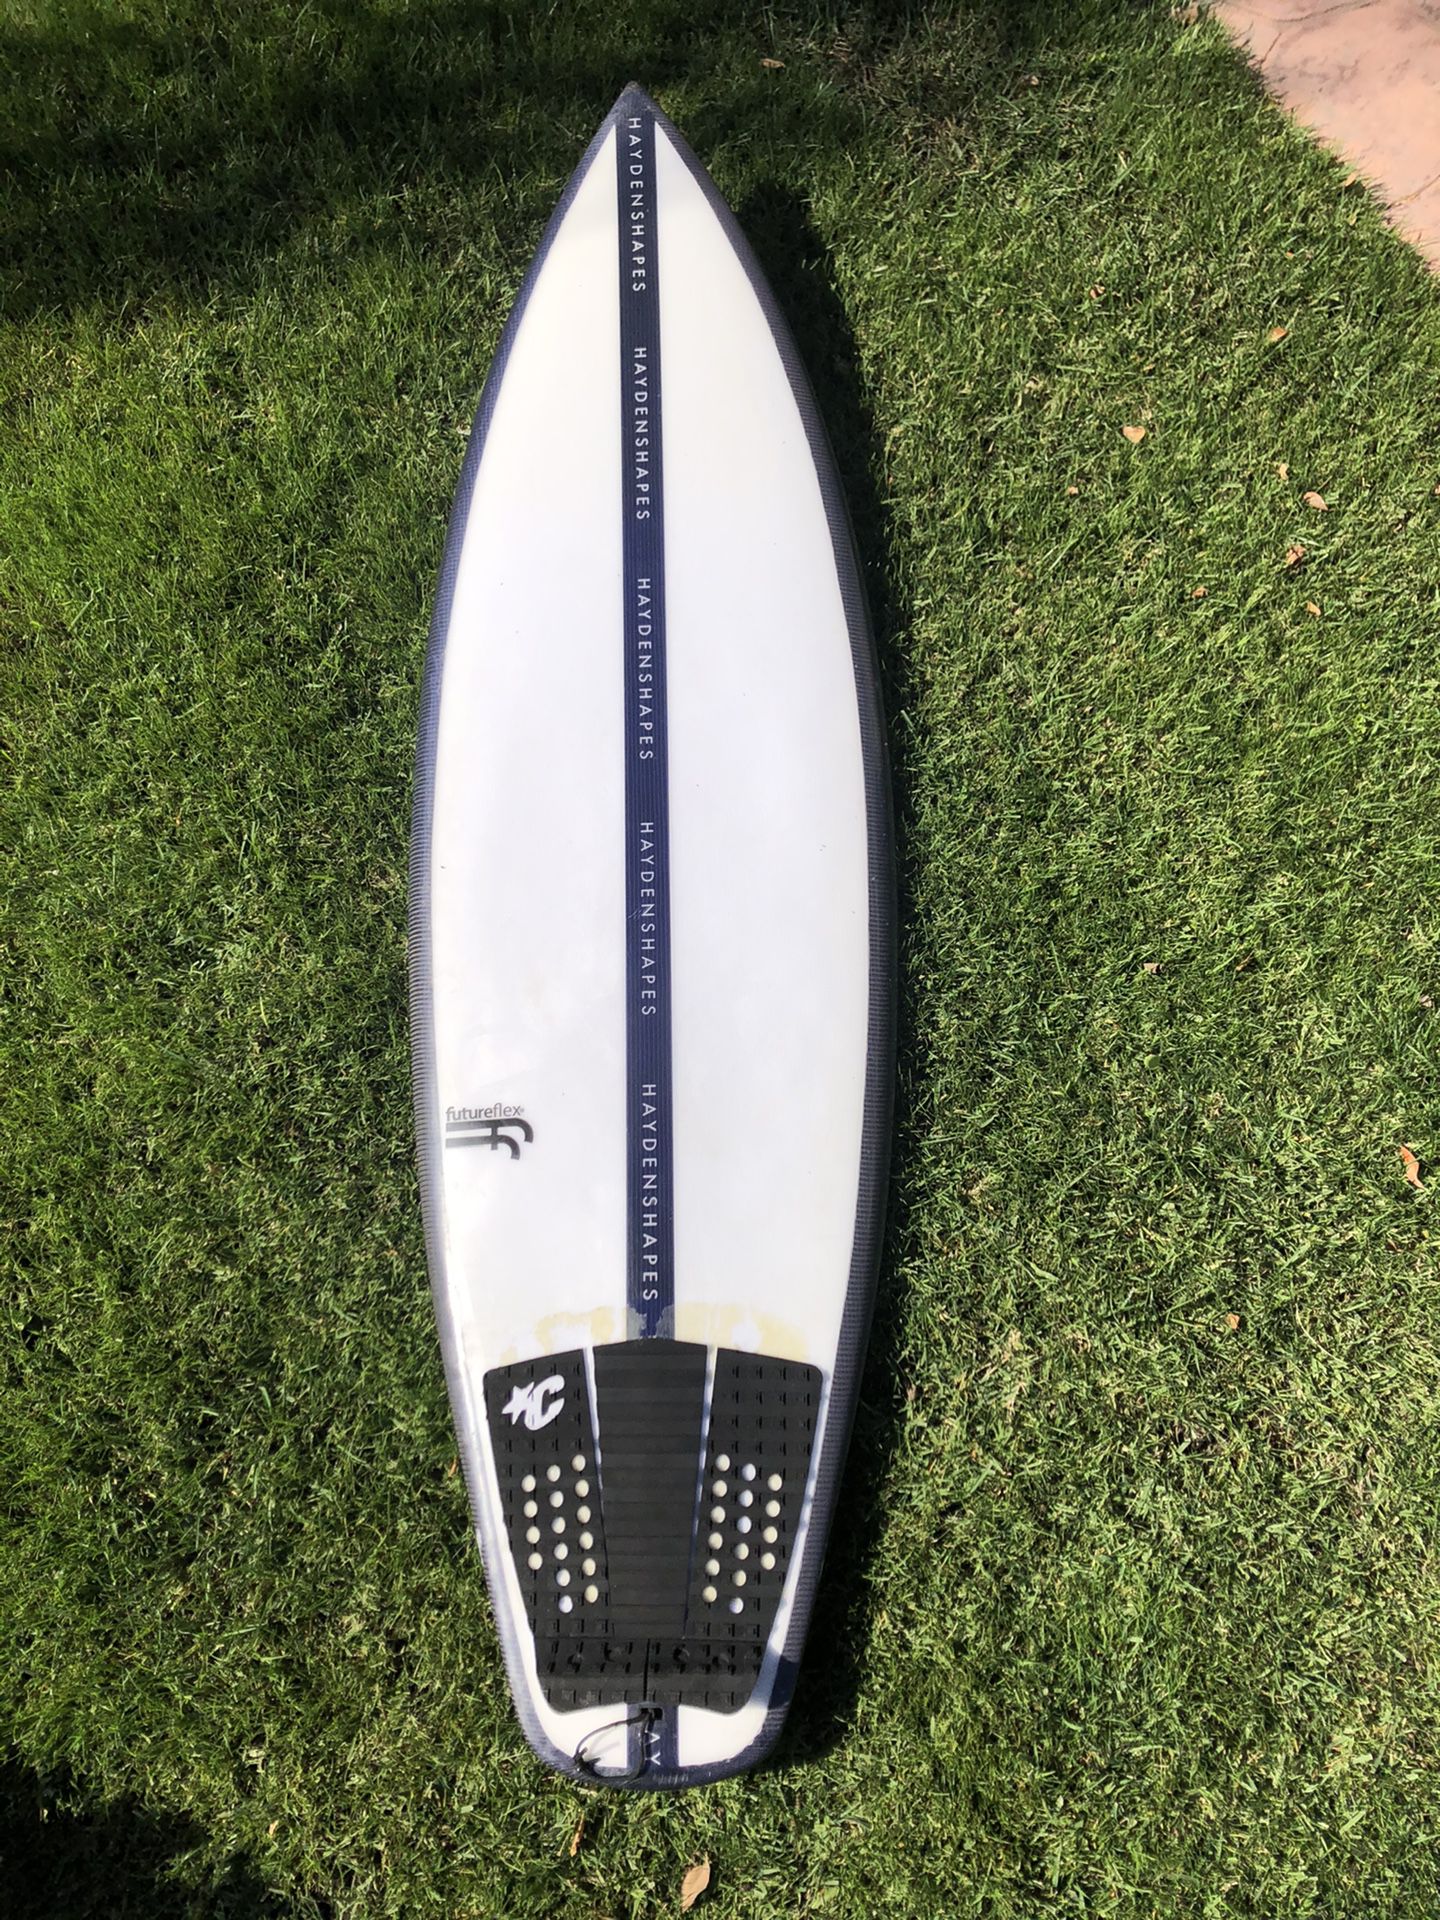 Hs holy grail surfboard